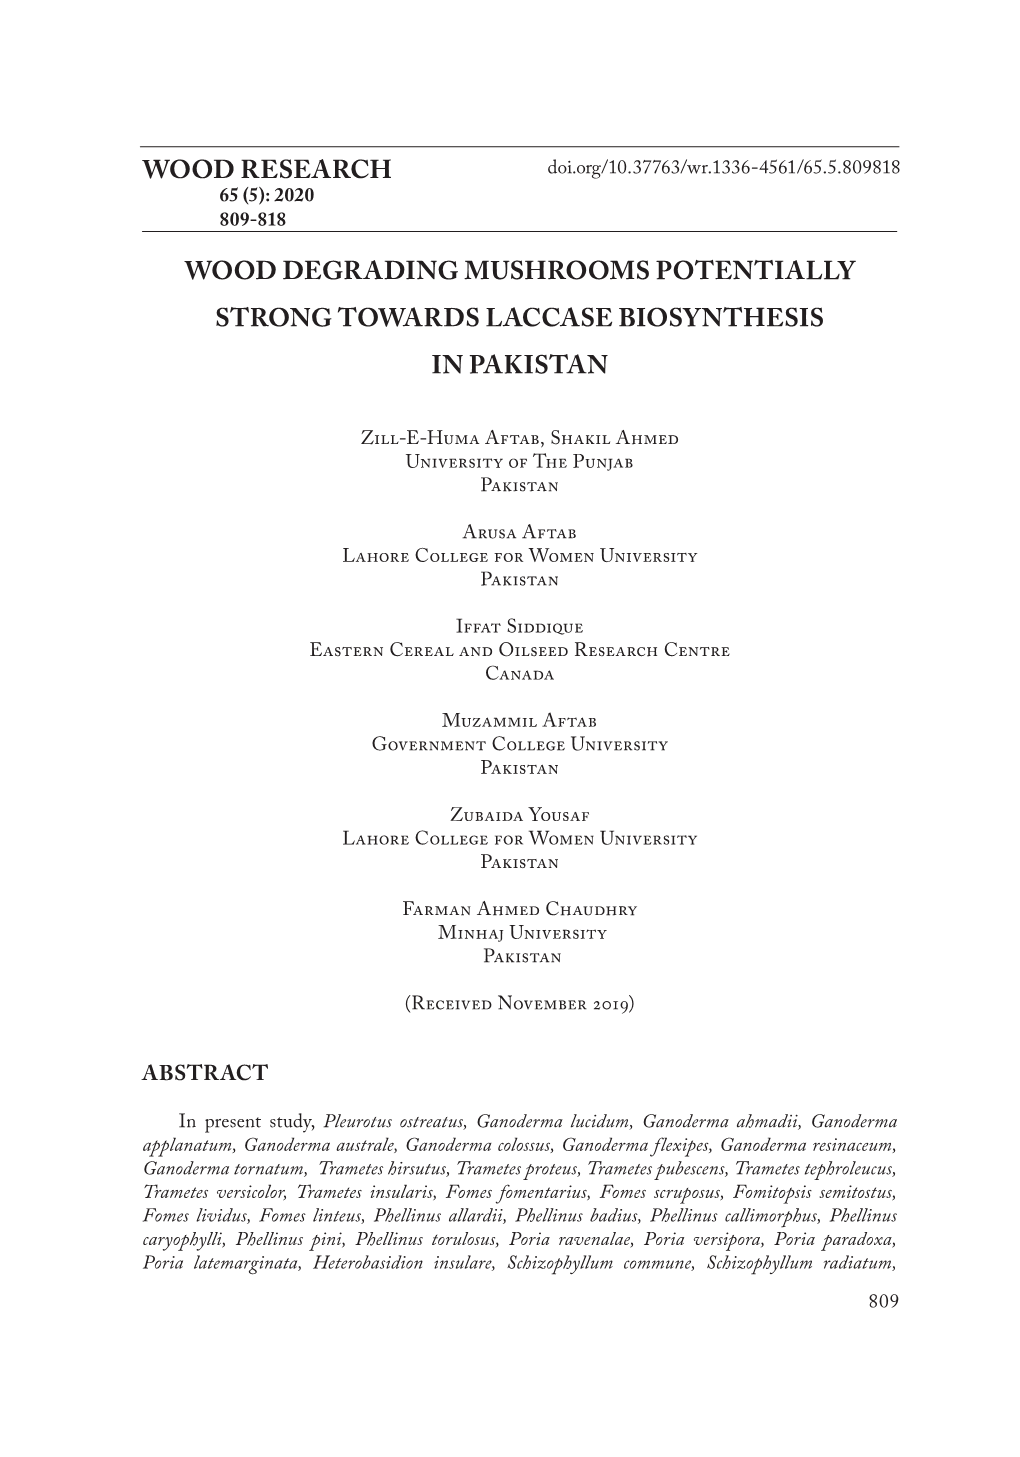 Wood Research Wood Degrading Mushrooms